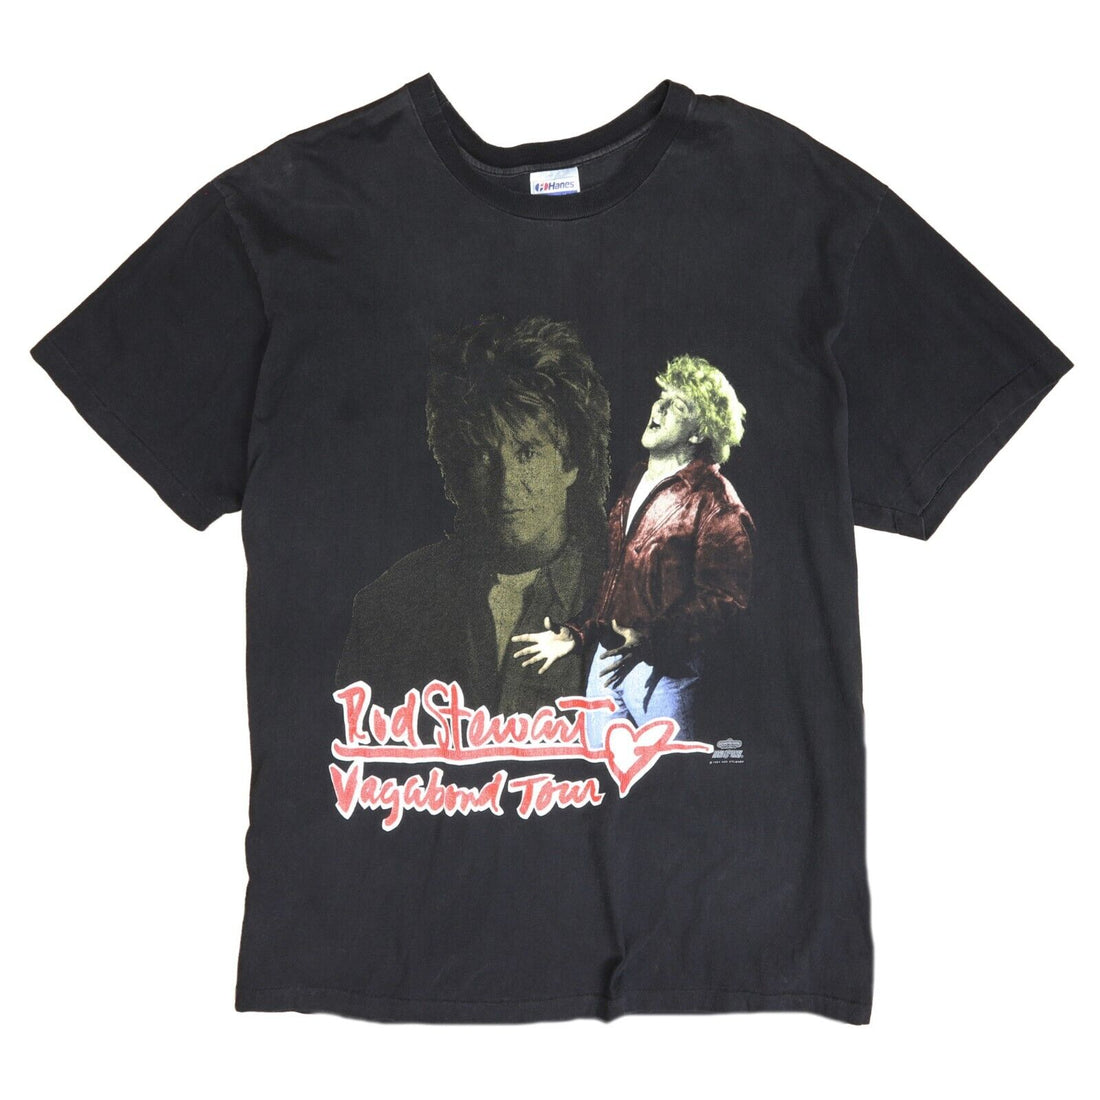 Vintage Rod Stewart Vagabond Heart Tour T-Shirt Size XL Music 1991 90s